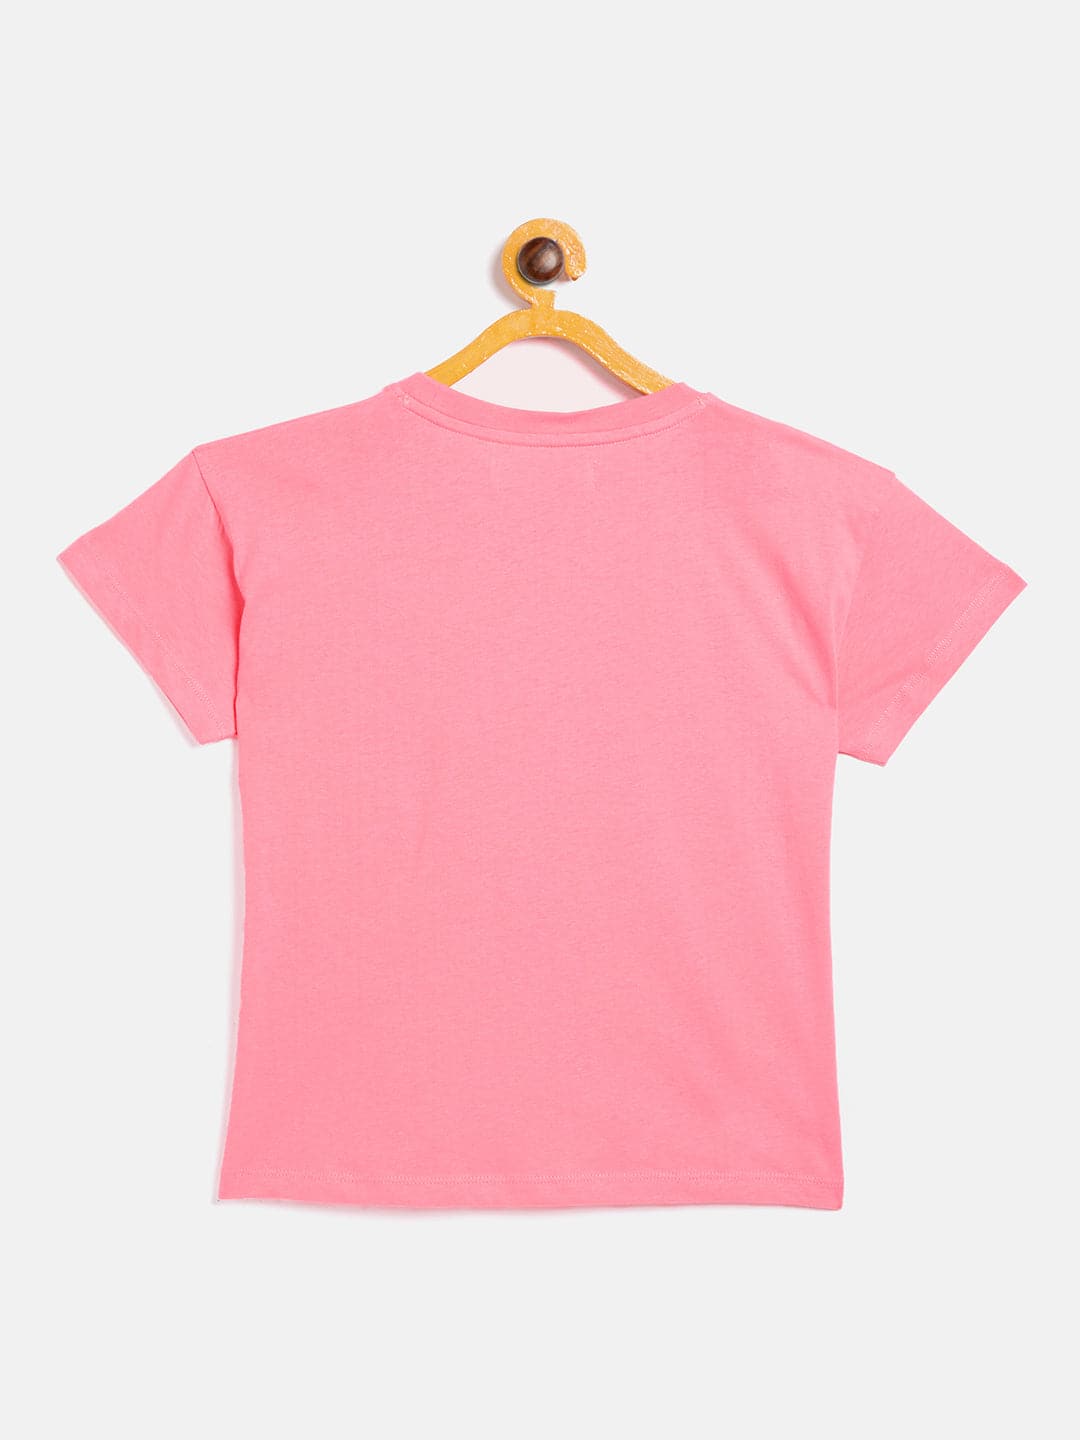 Girls Pink Better Days Ahead T-Shirt - Lyush Kids